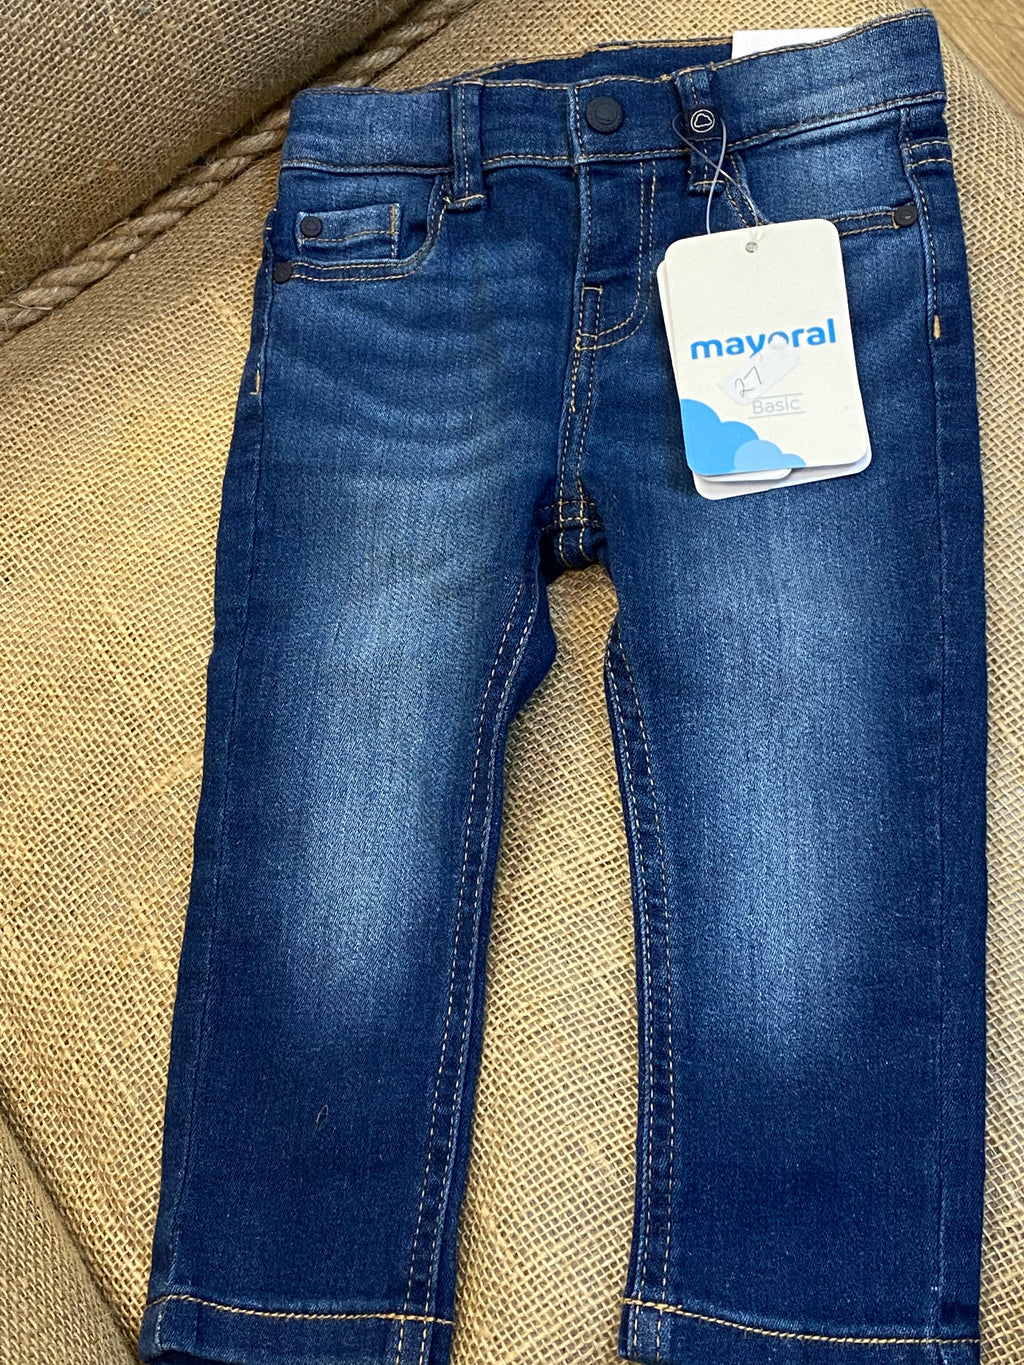 Mayoral Boys Jeans 510